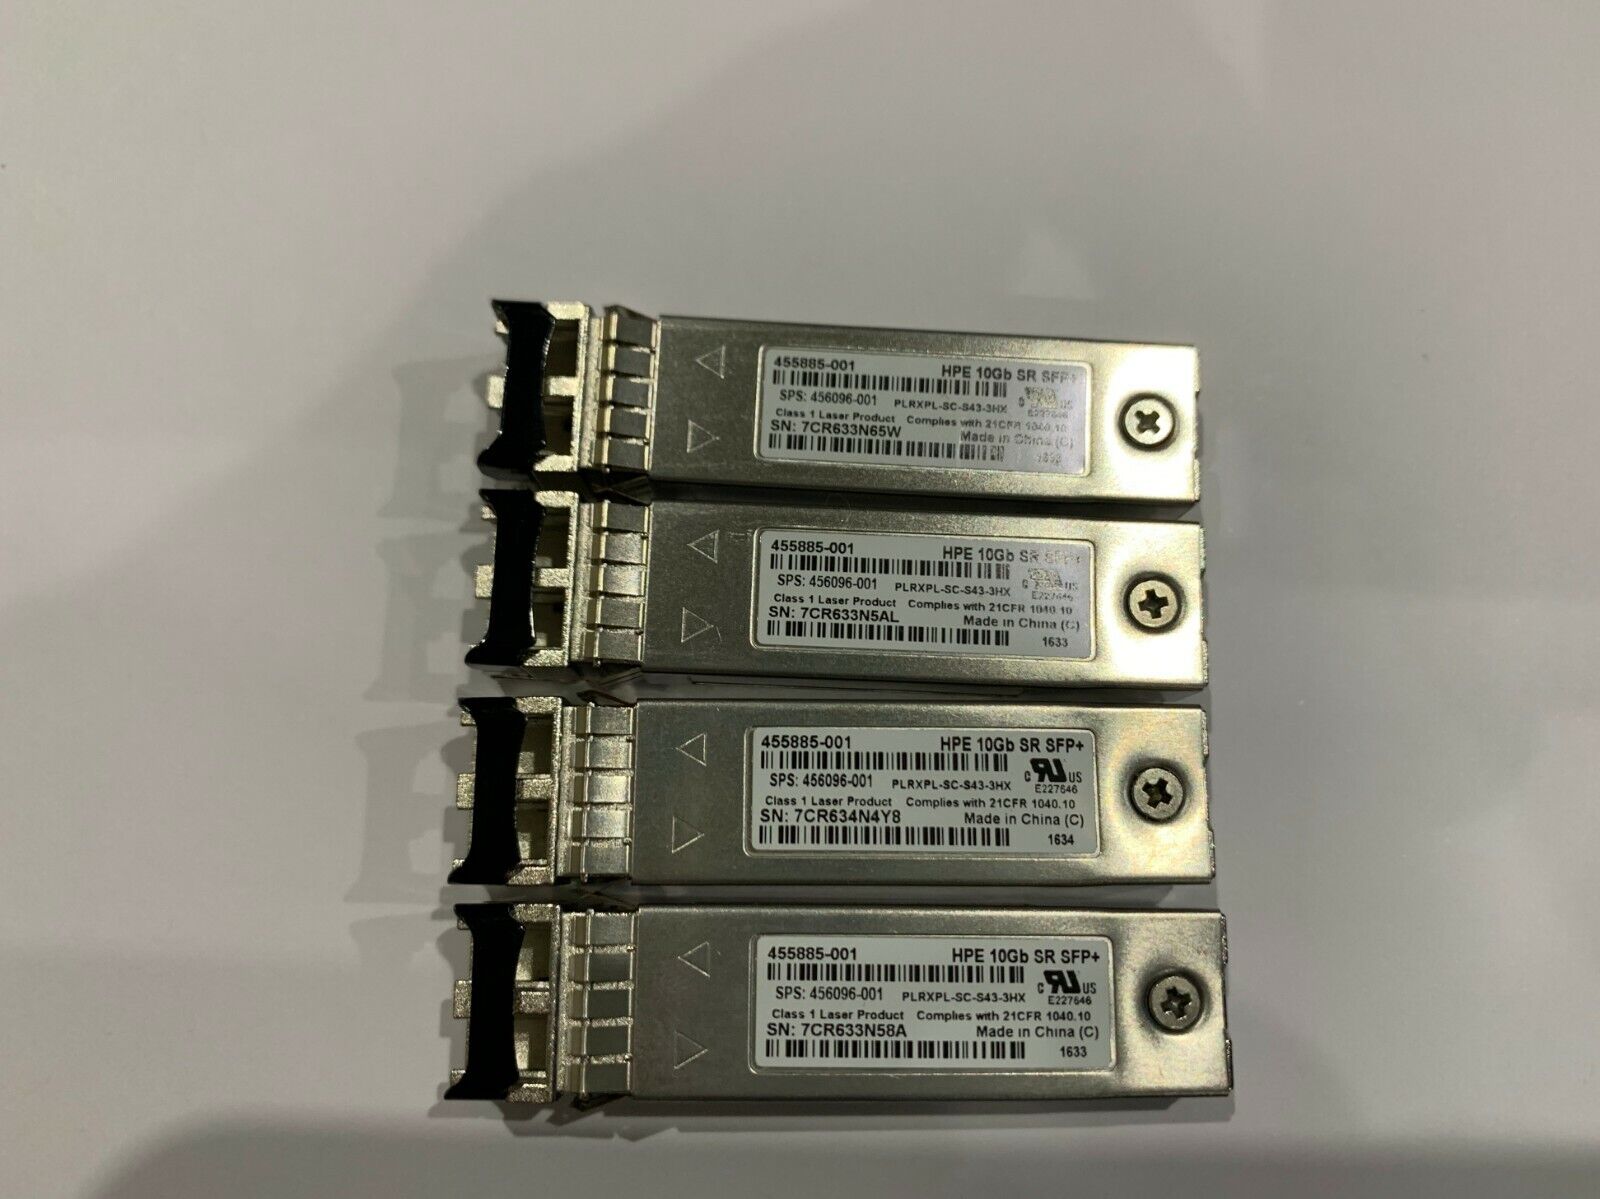 455885-001- 4x HPE 10GB SR SFP+ Transceivers 